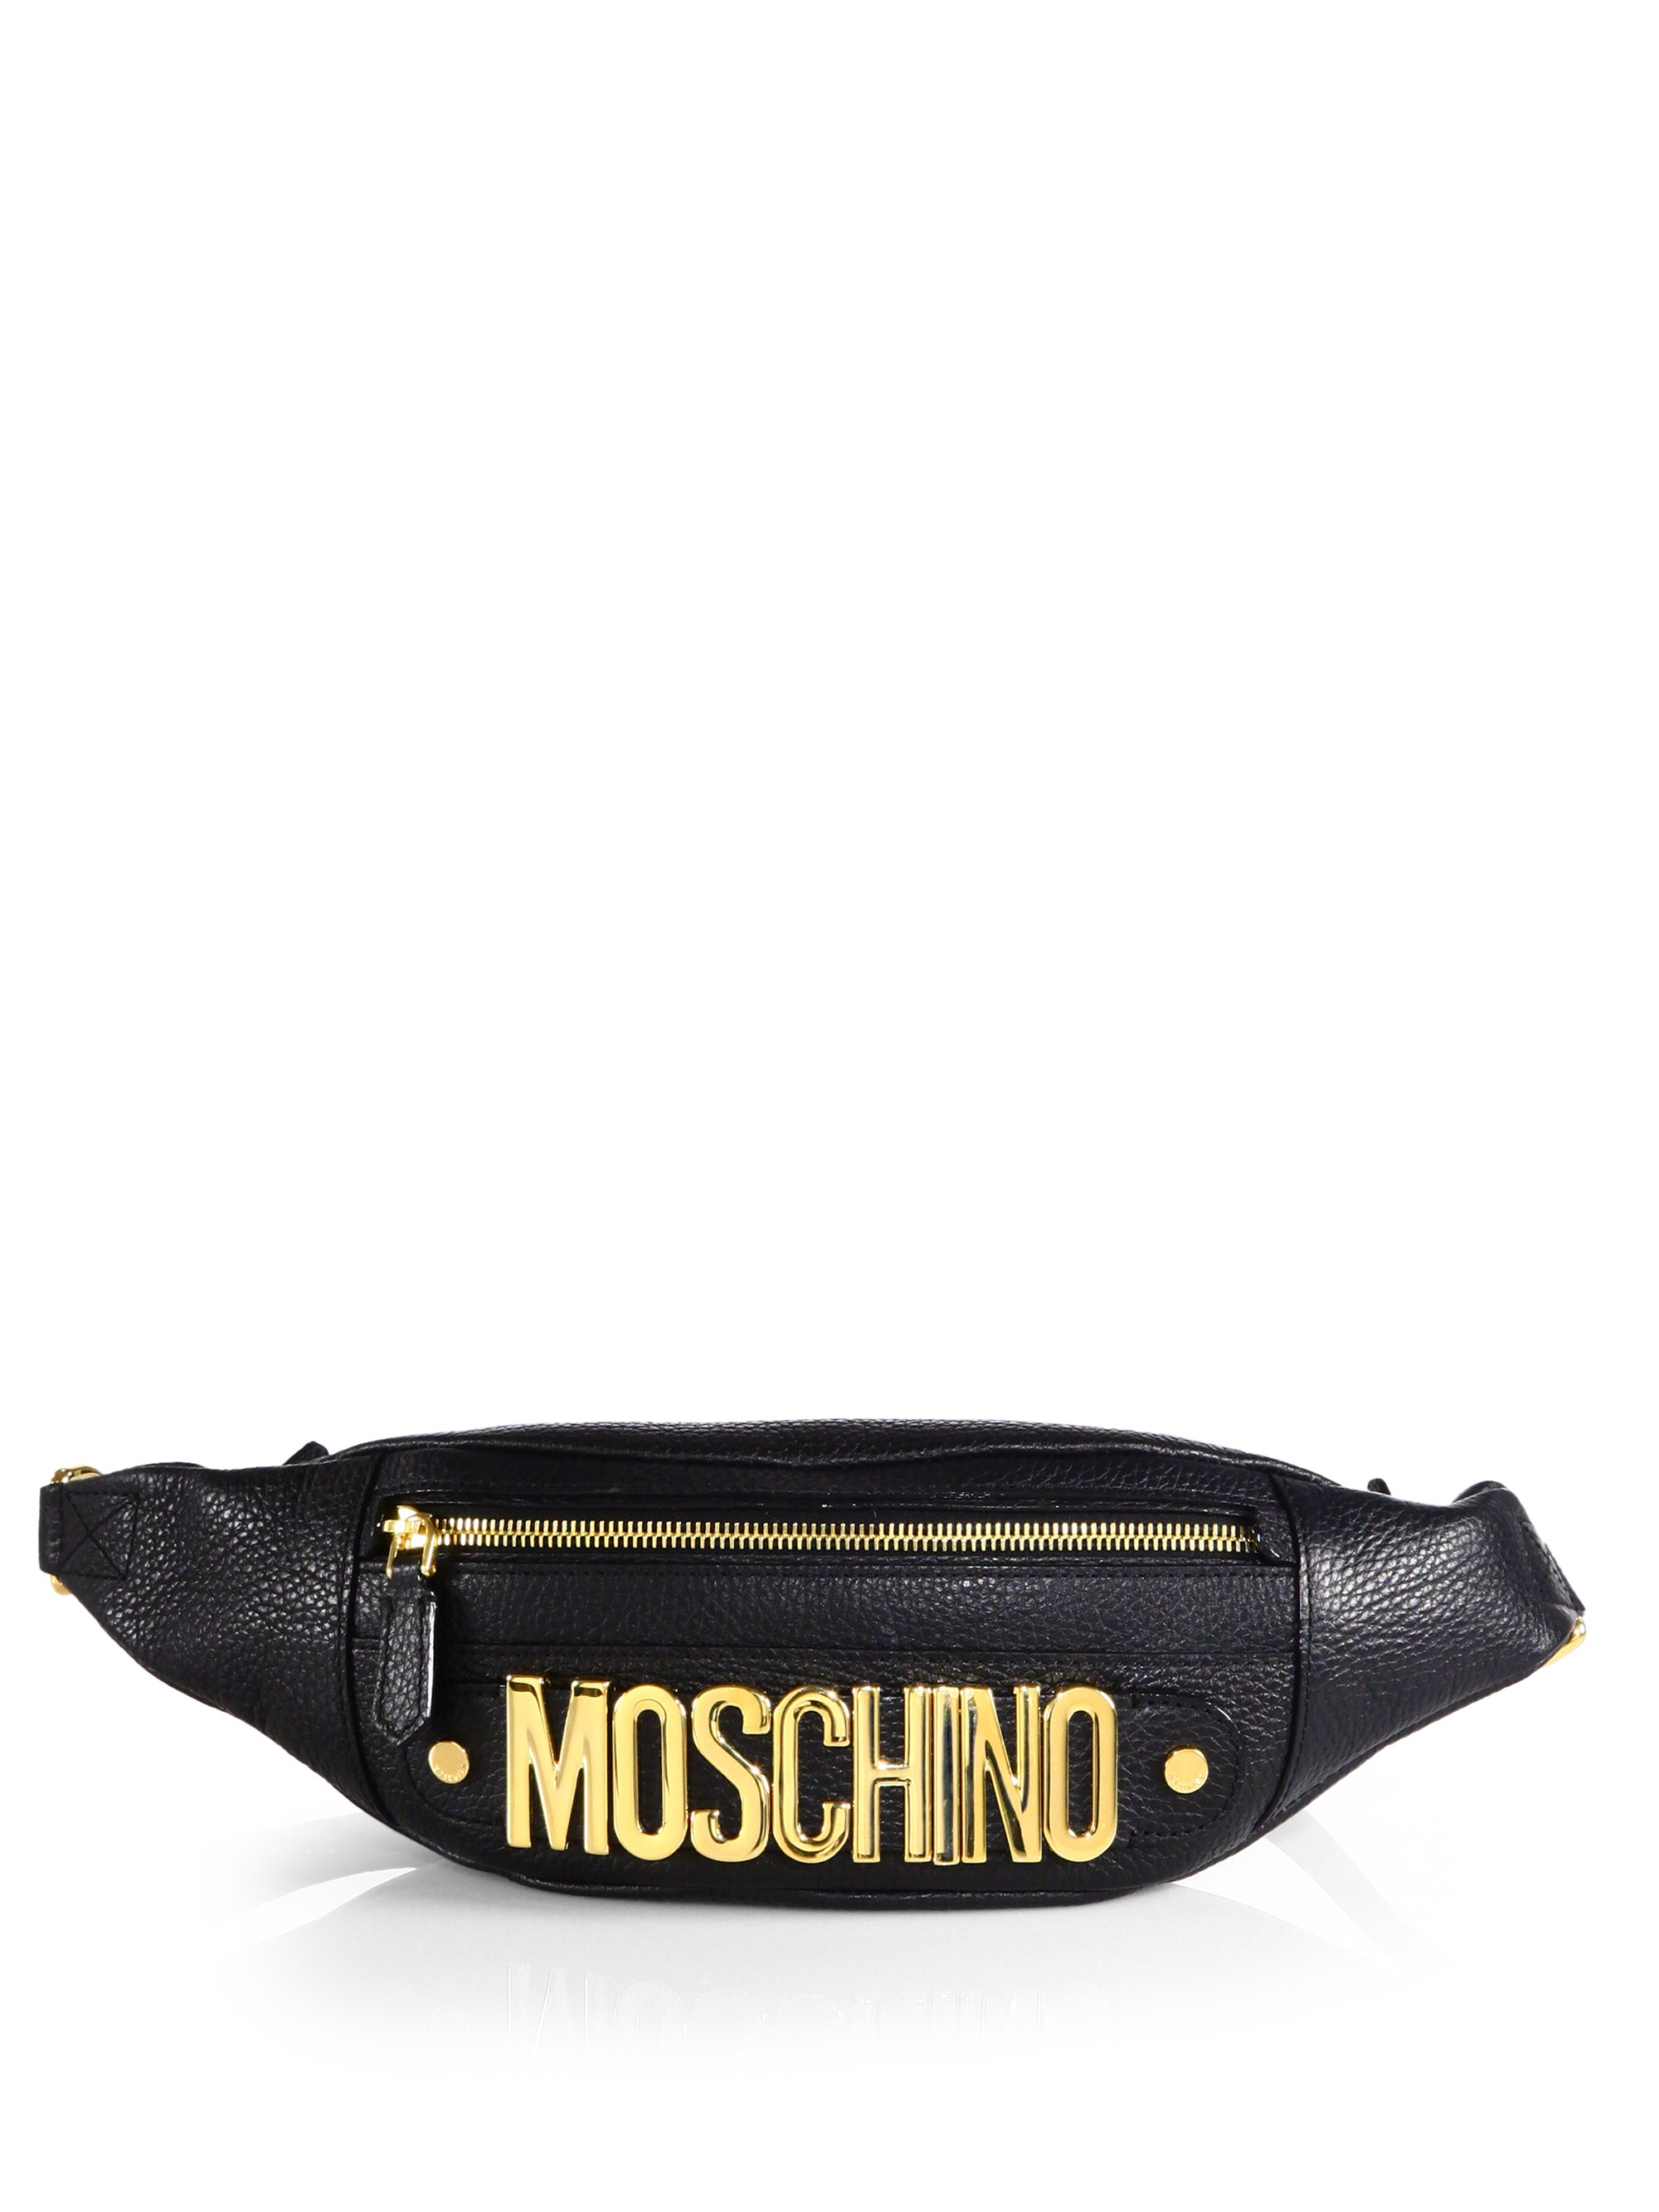 Moschino Rosello Logo Belt Bag in Black | Lyst